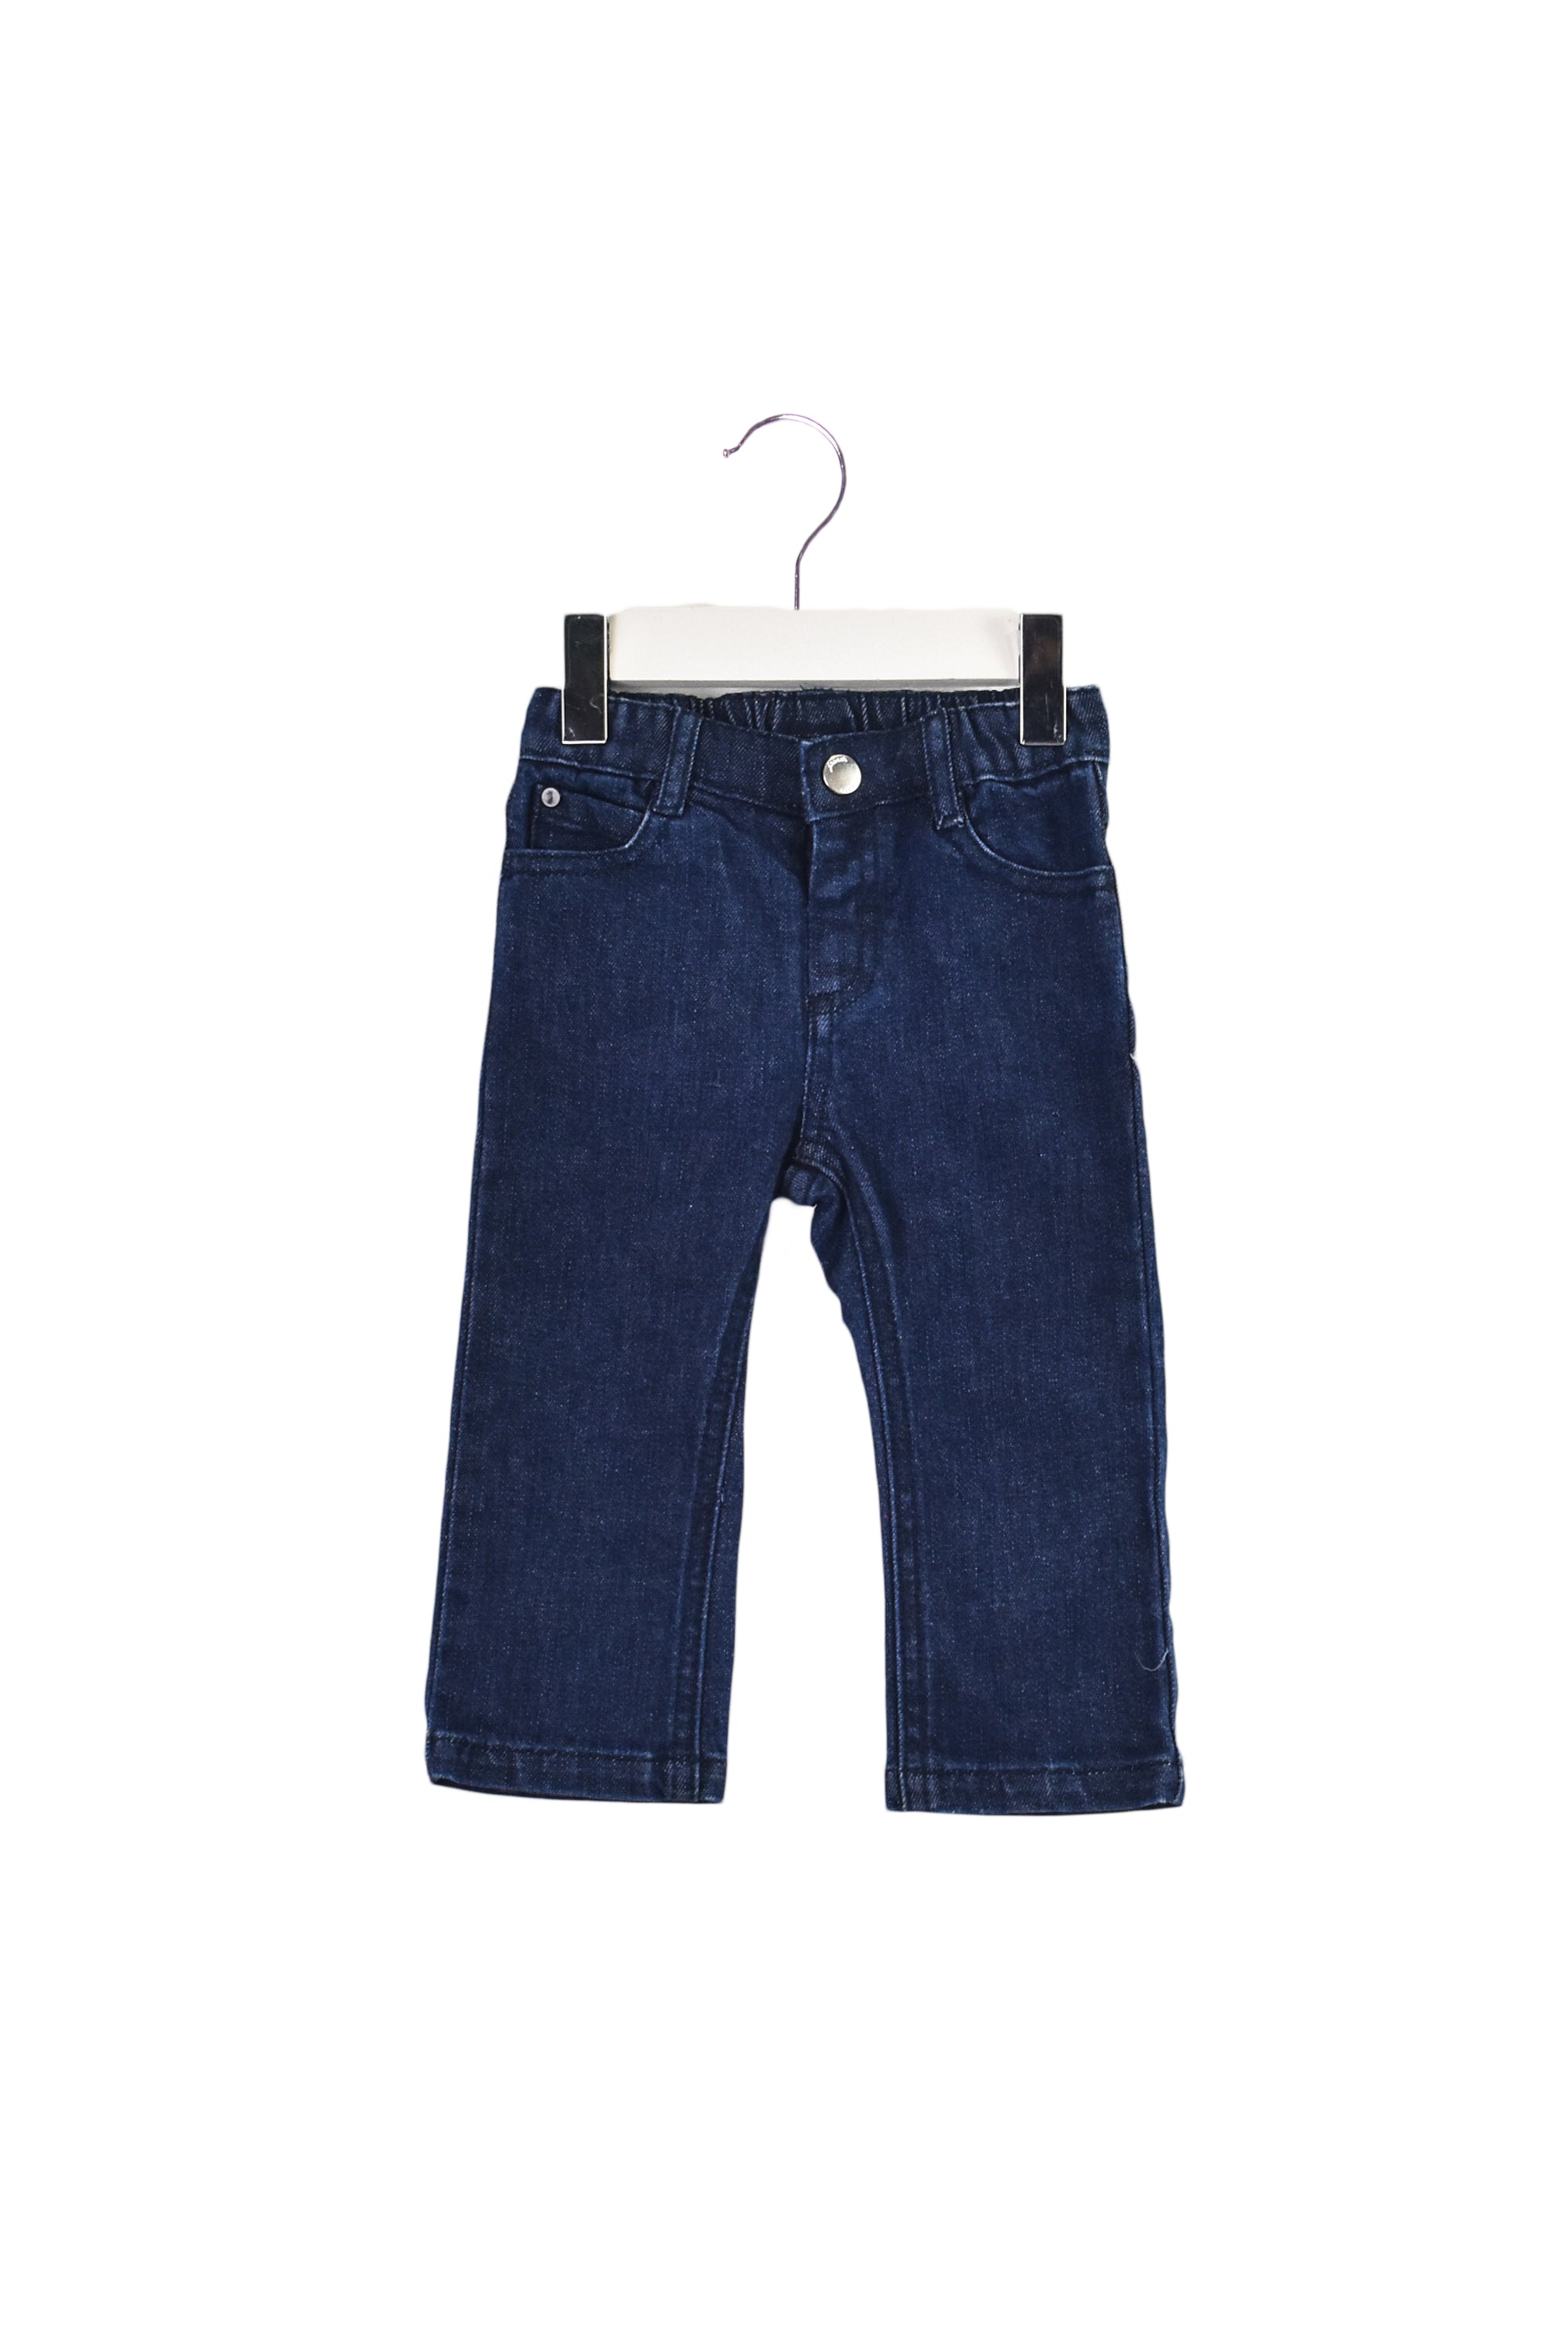 Navy J Brand Jeans M (EU 25) — Retykle